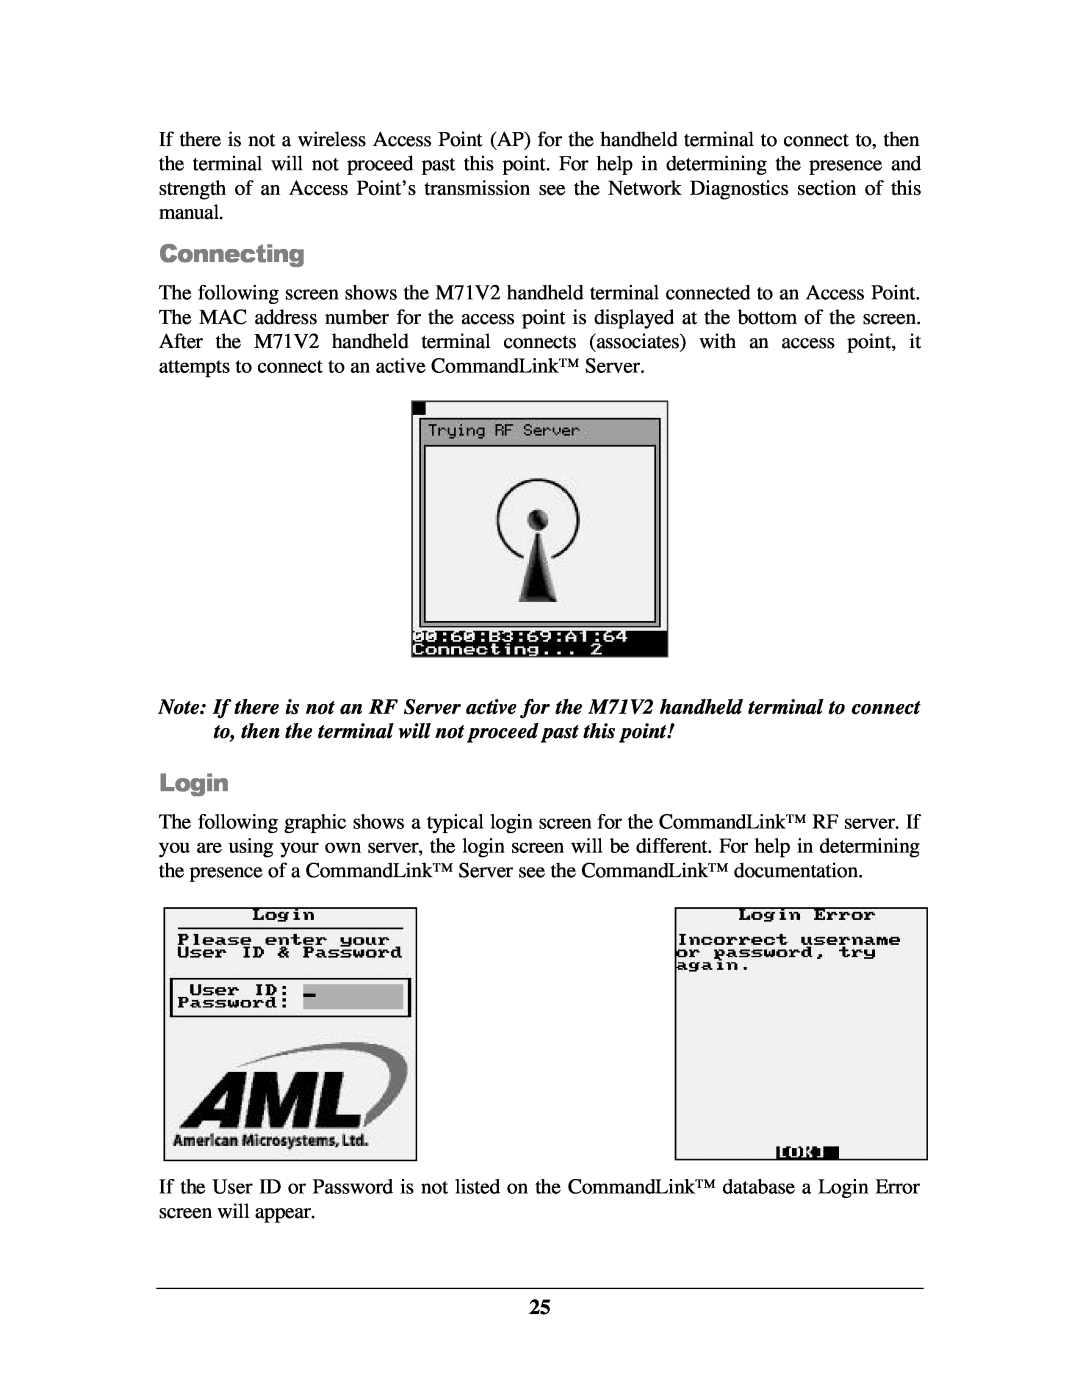 IBM M71V2 manual Connecting, Login 